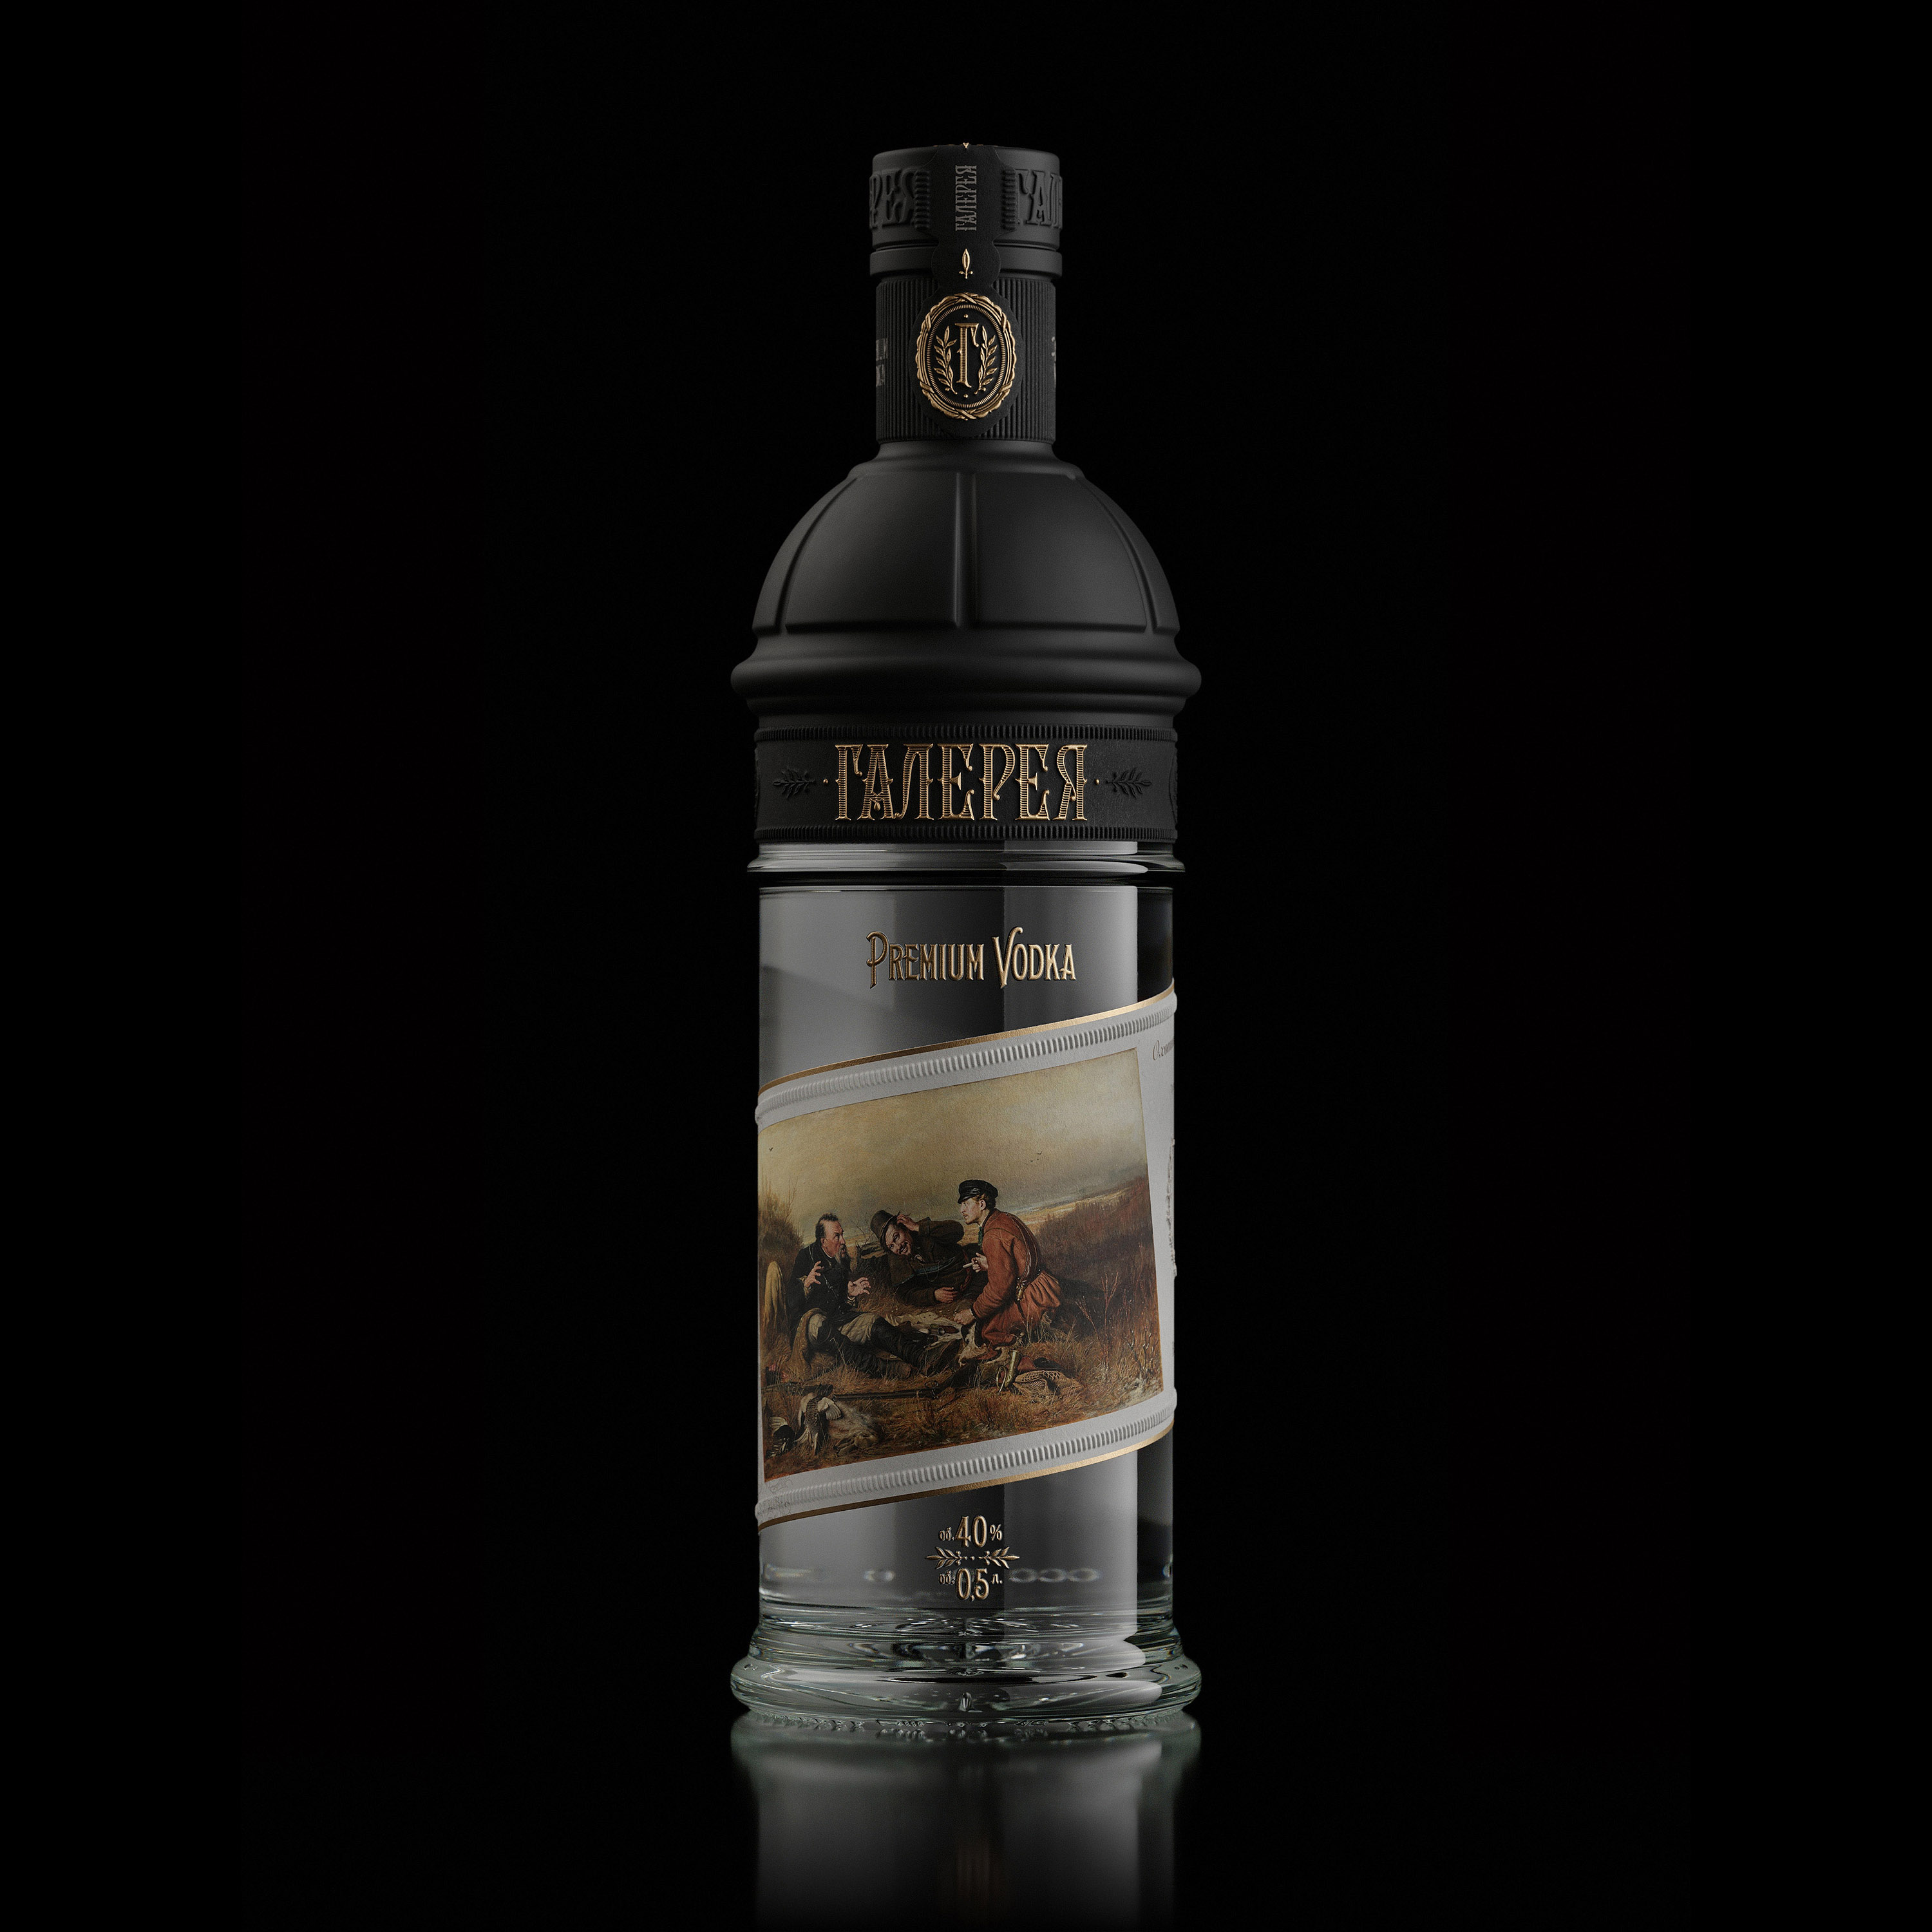 Distillery Piteyniy Dom Gallery Vodka Packaging Design Created by Andrey Antoshkin